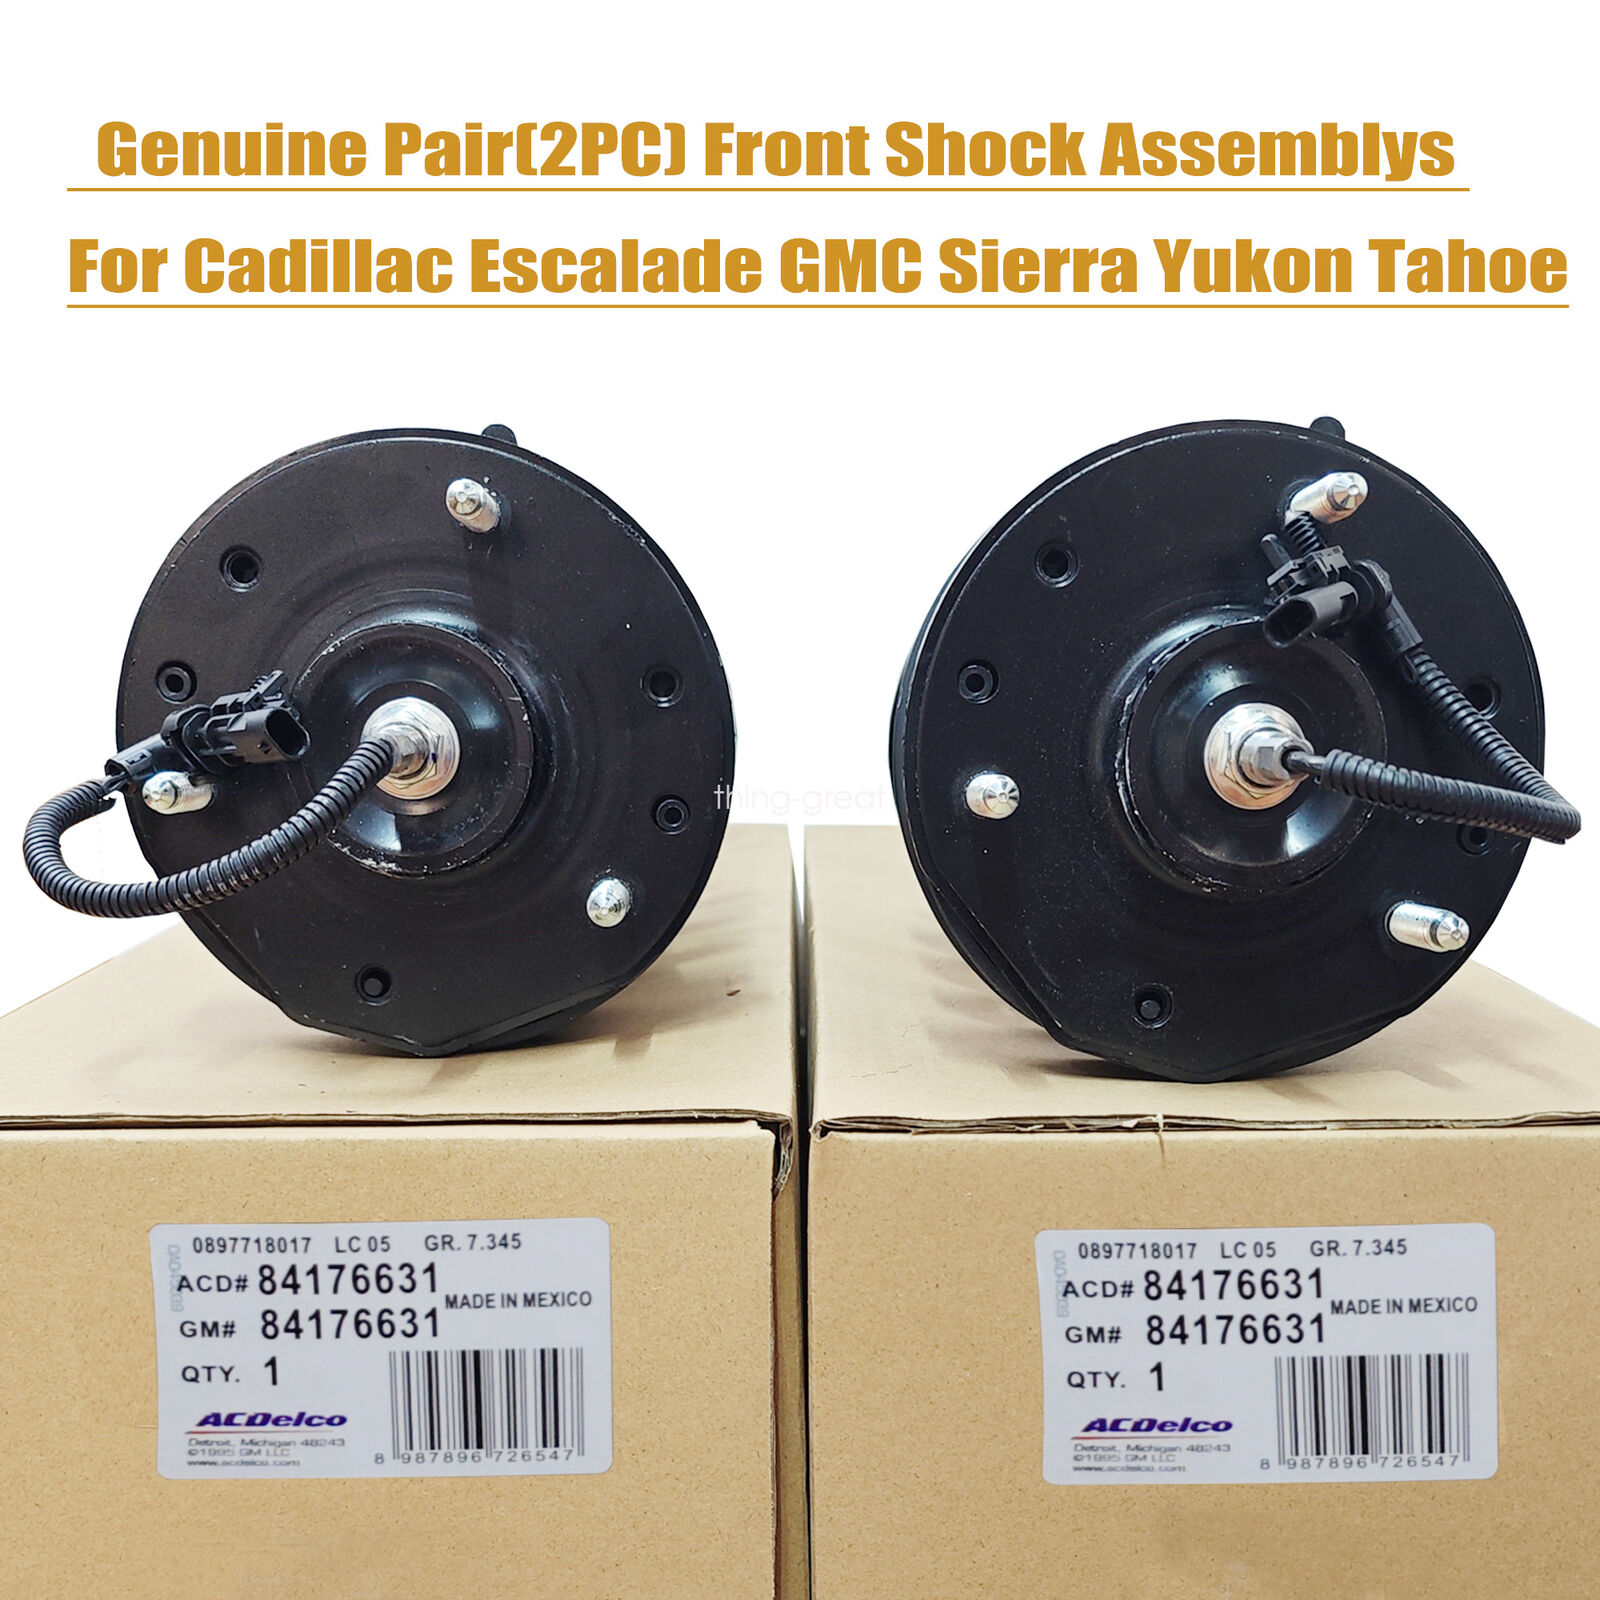 Genuine Pair Front Shock Assemblys For Cadillac Escalade GMC Sierra Yukon Tahoe